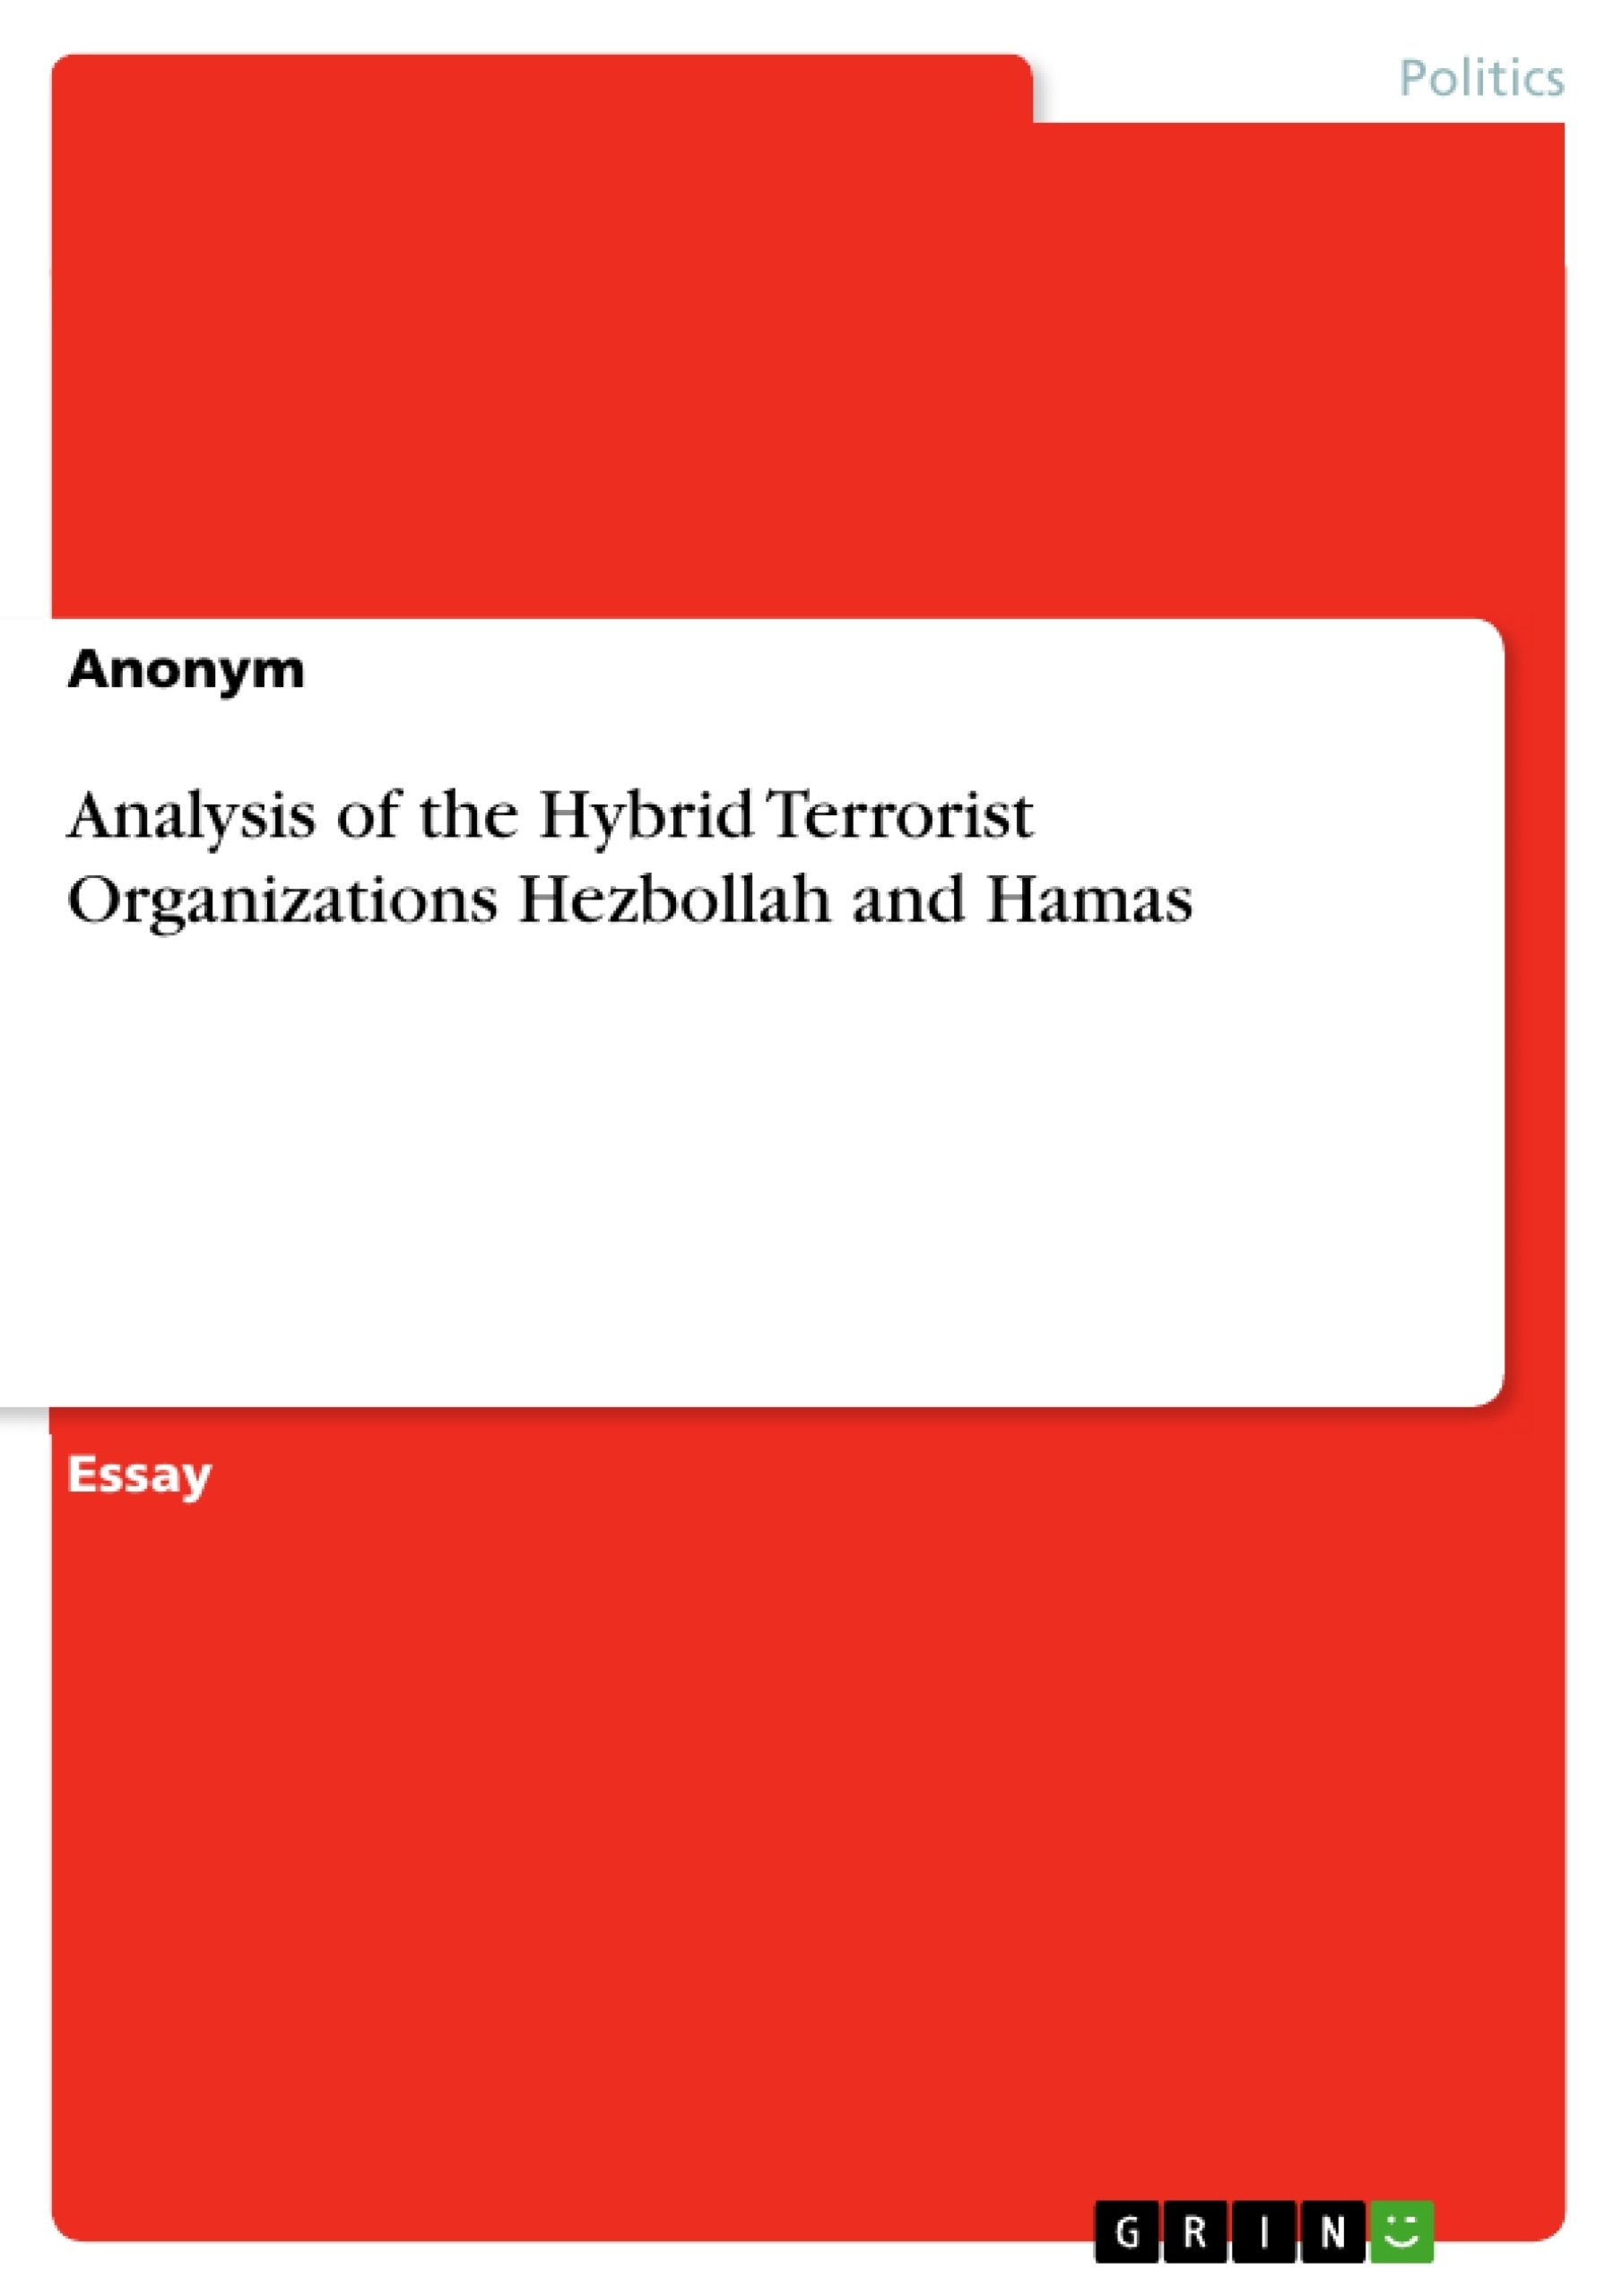 Title: Analysis of the Hybrid Terrorist Organizations Hezbollah and Hamas